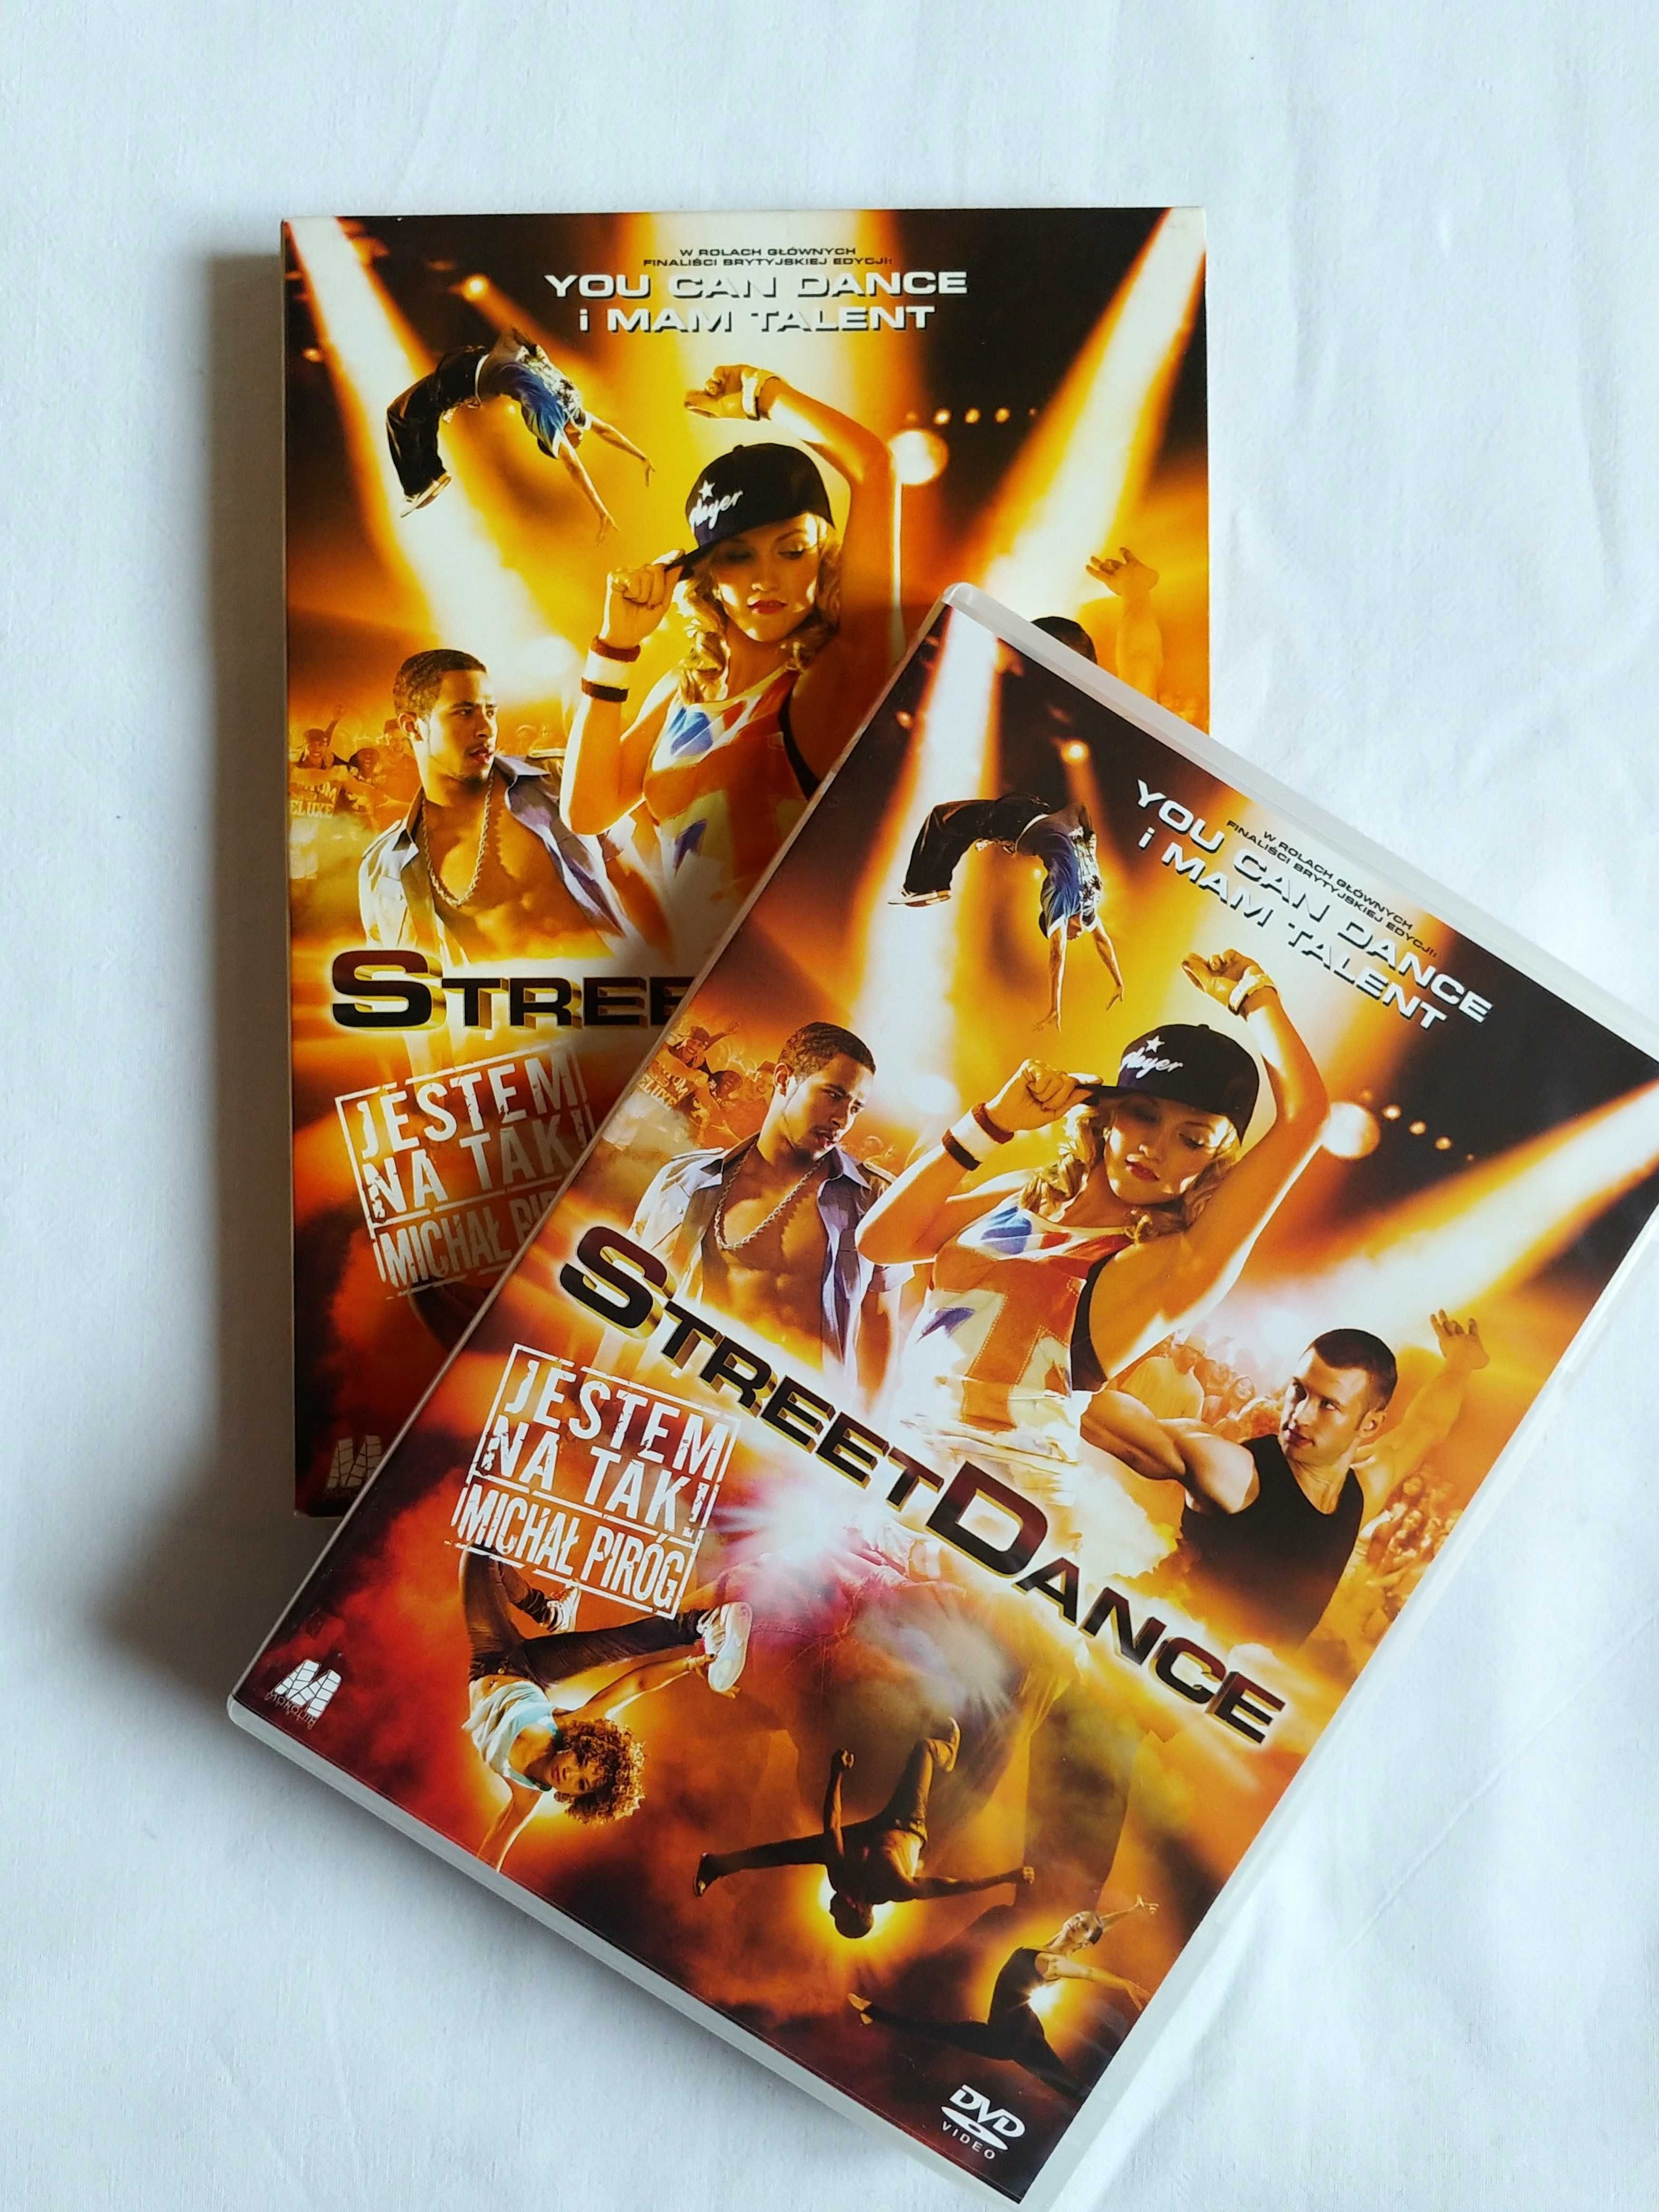 StreetDance (DVD) Reżyser: Giwa Max , Pasquini Dania (taniec, muzyka)